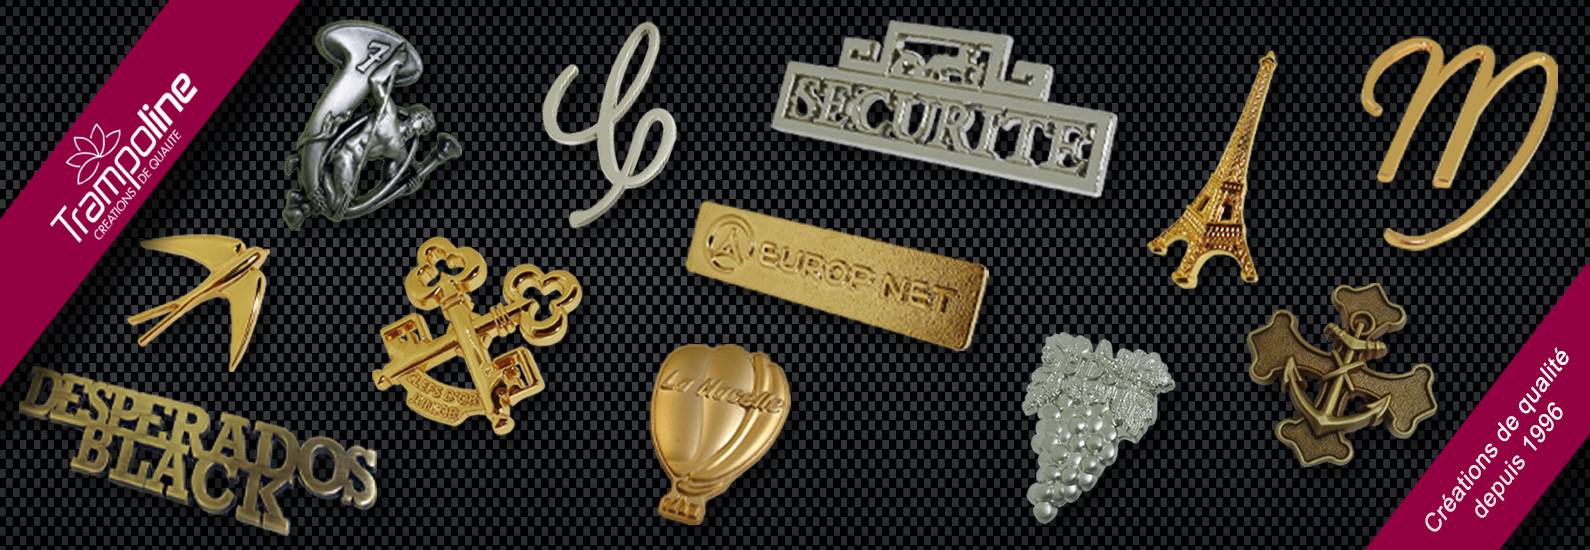 5 badge sur mesure insigne qualite luxe corporatif pin's avec logo usine de pin's